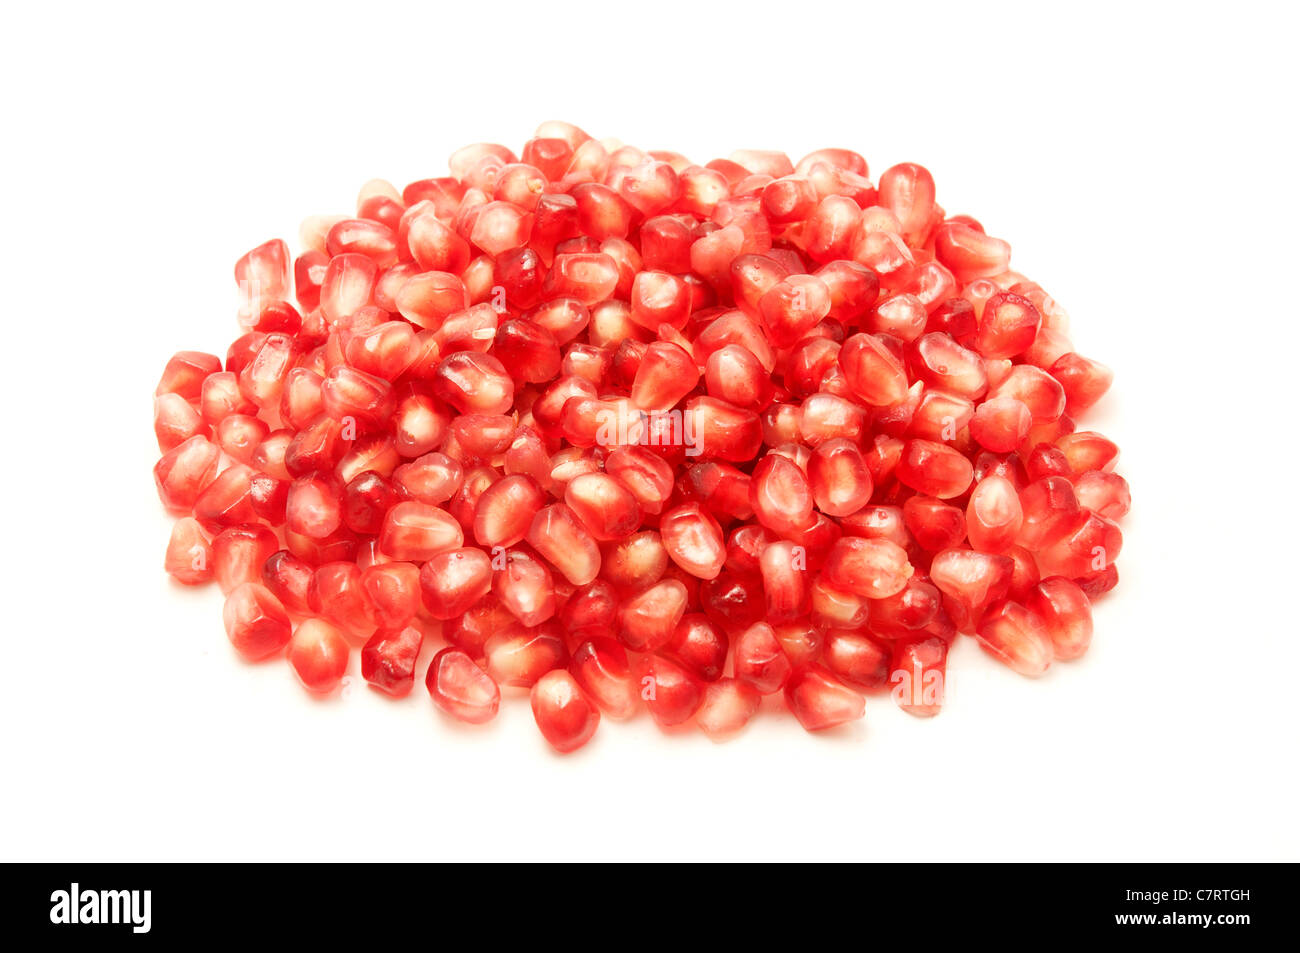 Pomegranate arils on a white background Stock Photo